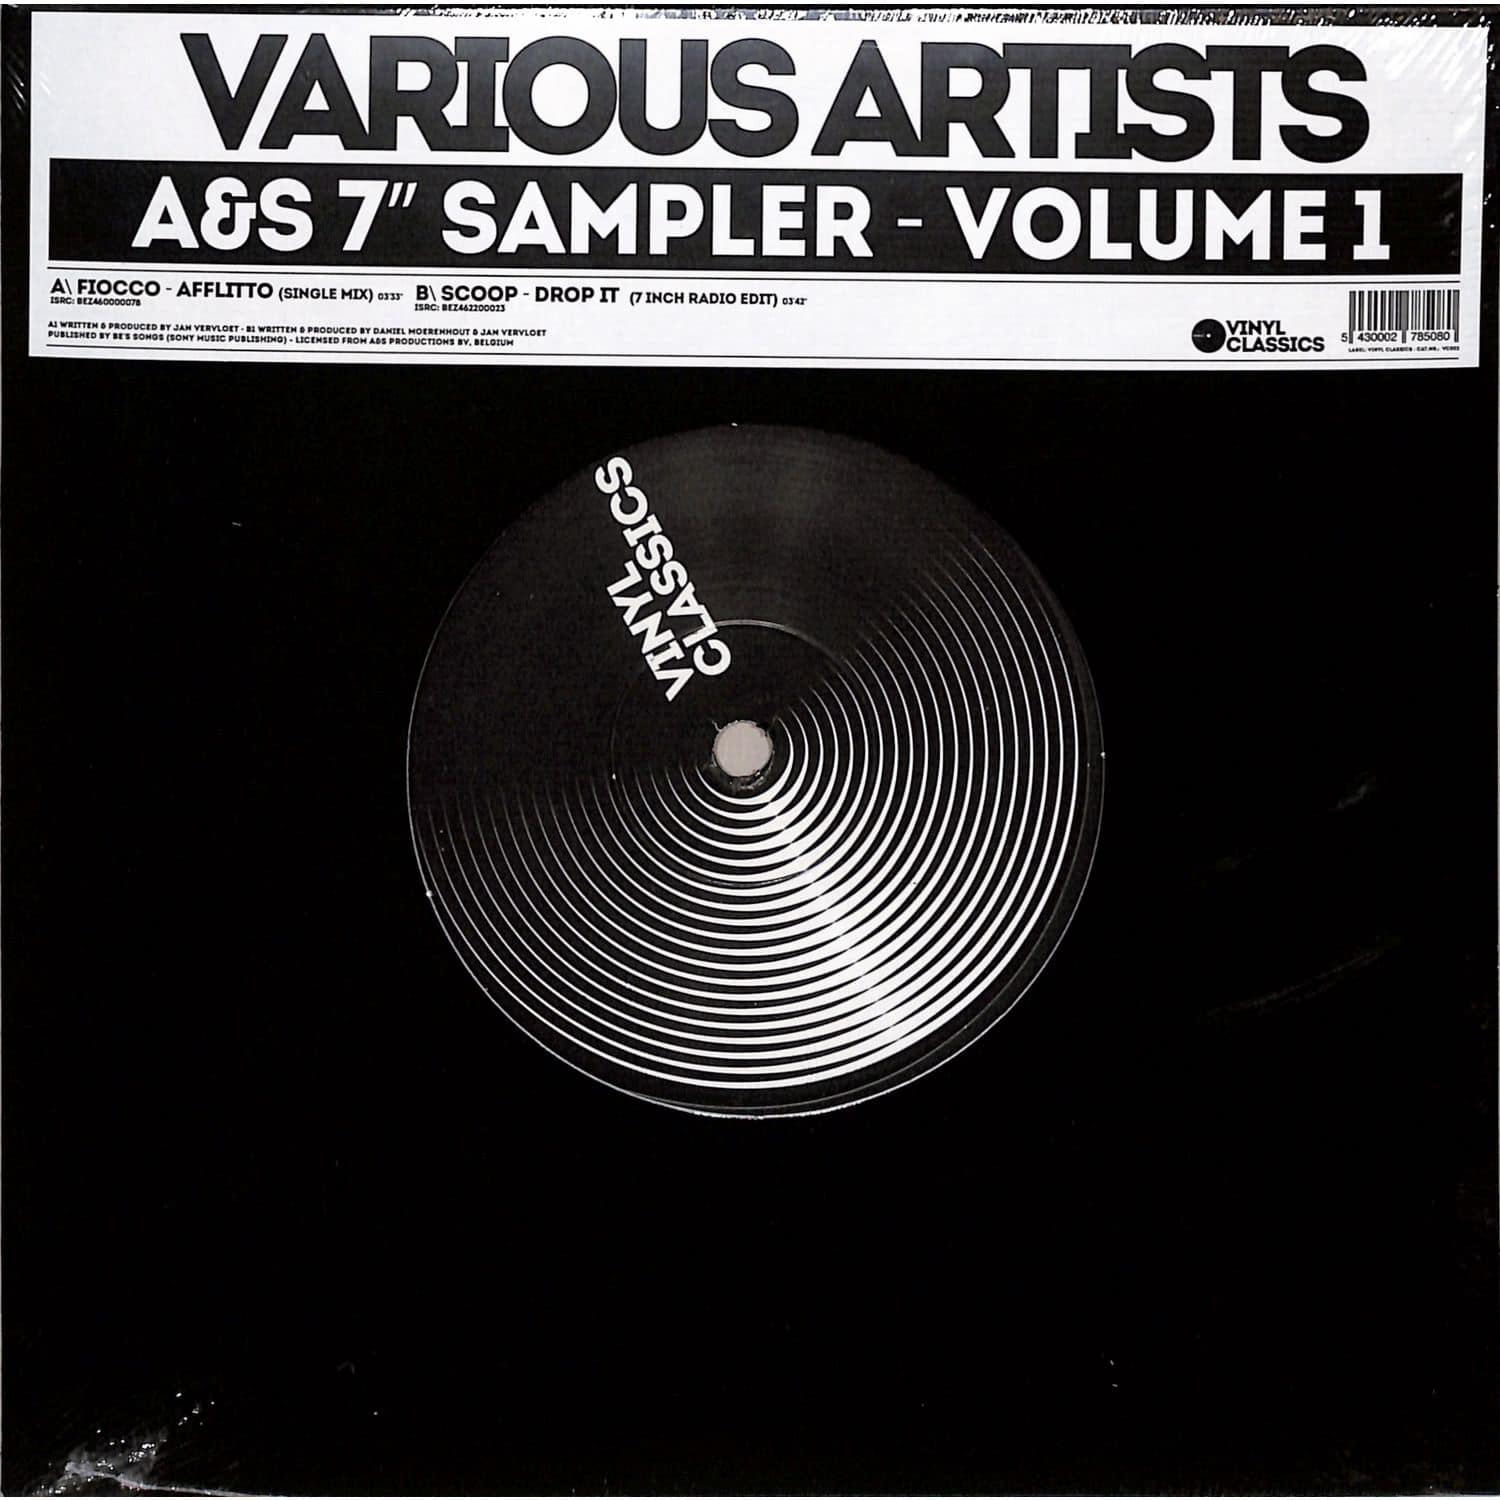 Various Artists - A&S 7INCH SAMPLER - VOLUME 1 